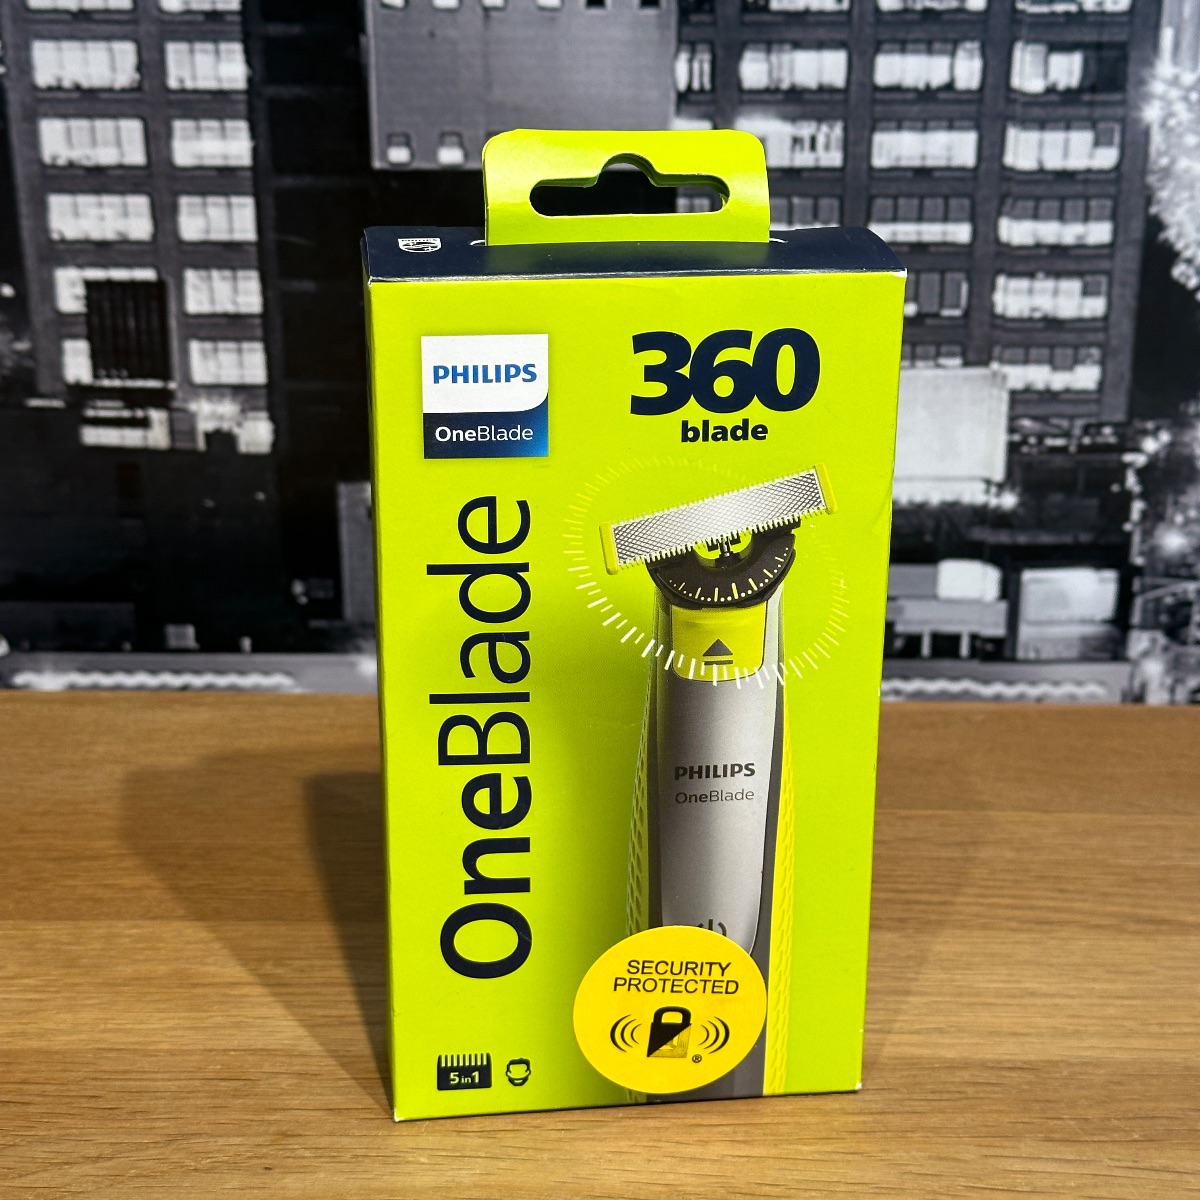 Philips OneBlade 360 (QP2734/20) Hair Shaver Trimmer Razor Adjustable Comb/ BNIB QP2734/20 8720689003414 (Brand New)